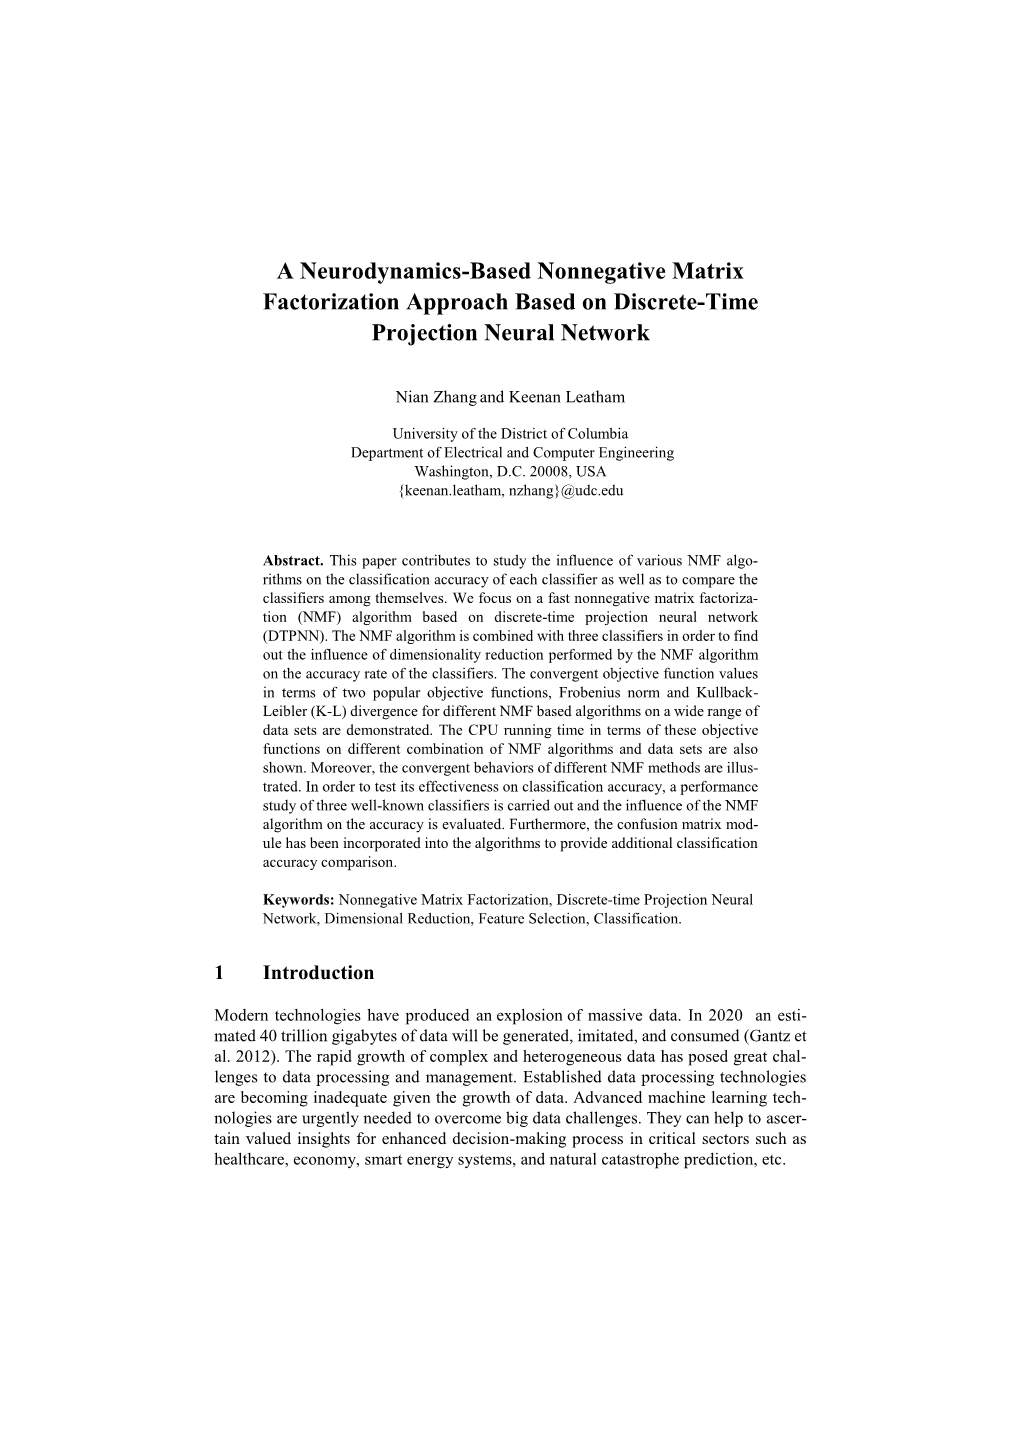 A Neurodynamics-Based Nonnegative Matrix Factorization Approach Based on Discrete-Time Projection Neural Network